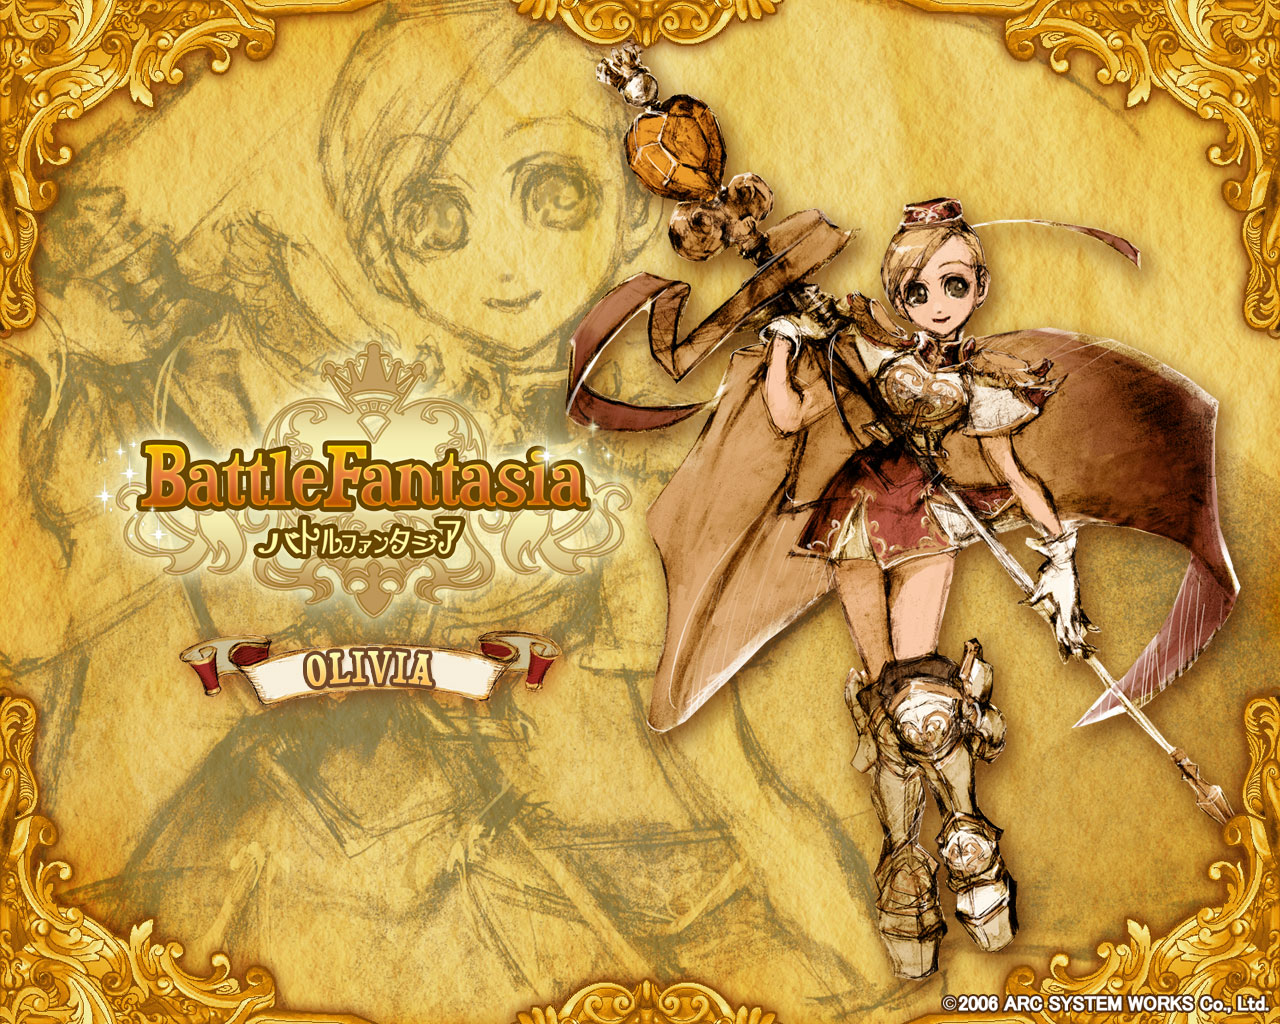 Battle Fantasia -Revised Edition- HD wallpapers, Desktop wallpaper - most viewed